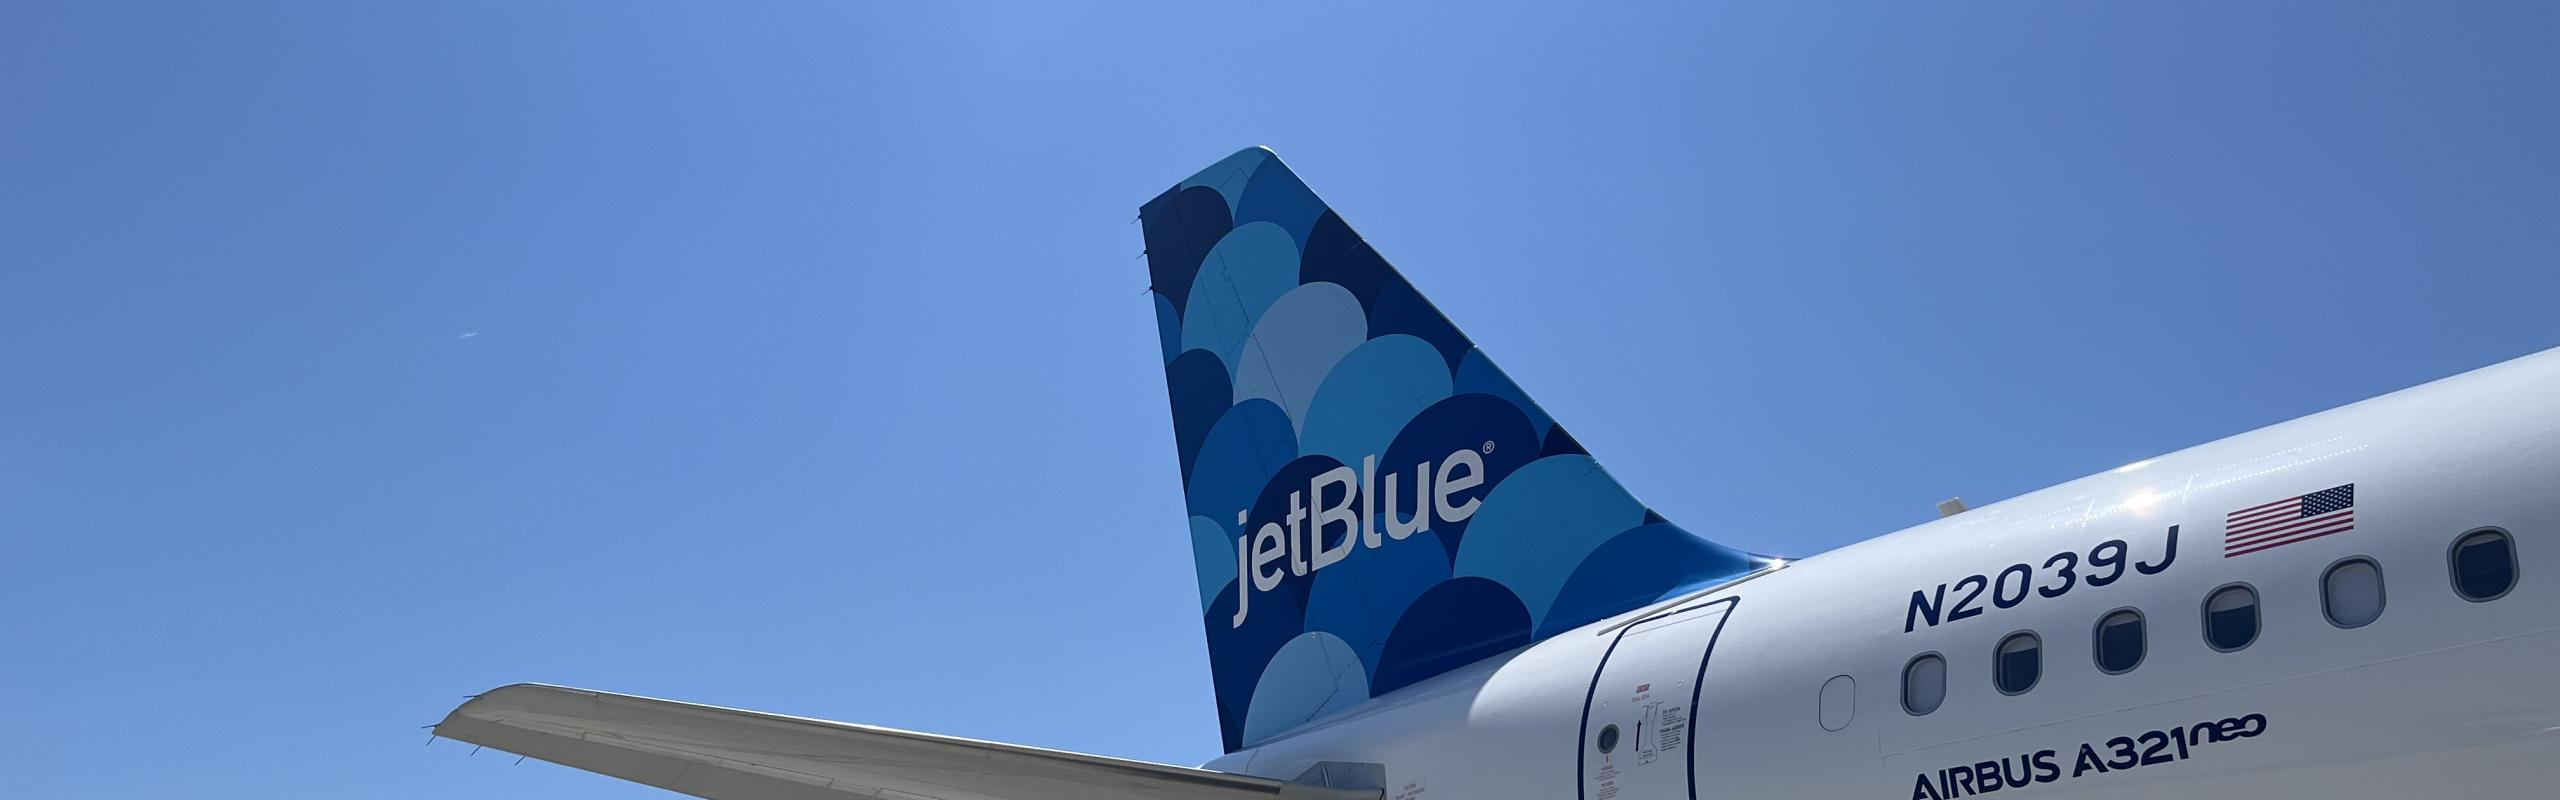 JetBlue Airways Announces Service to Orlando